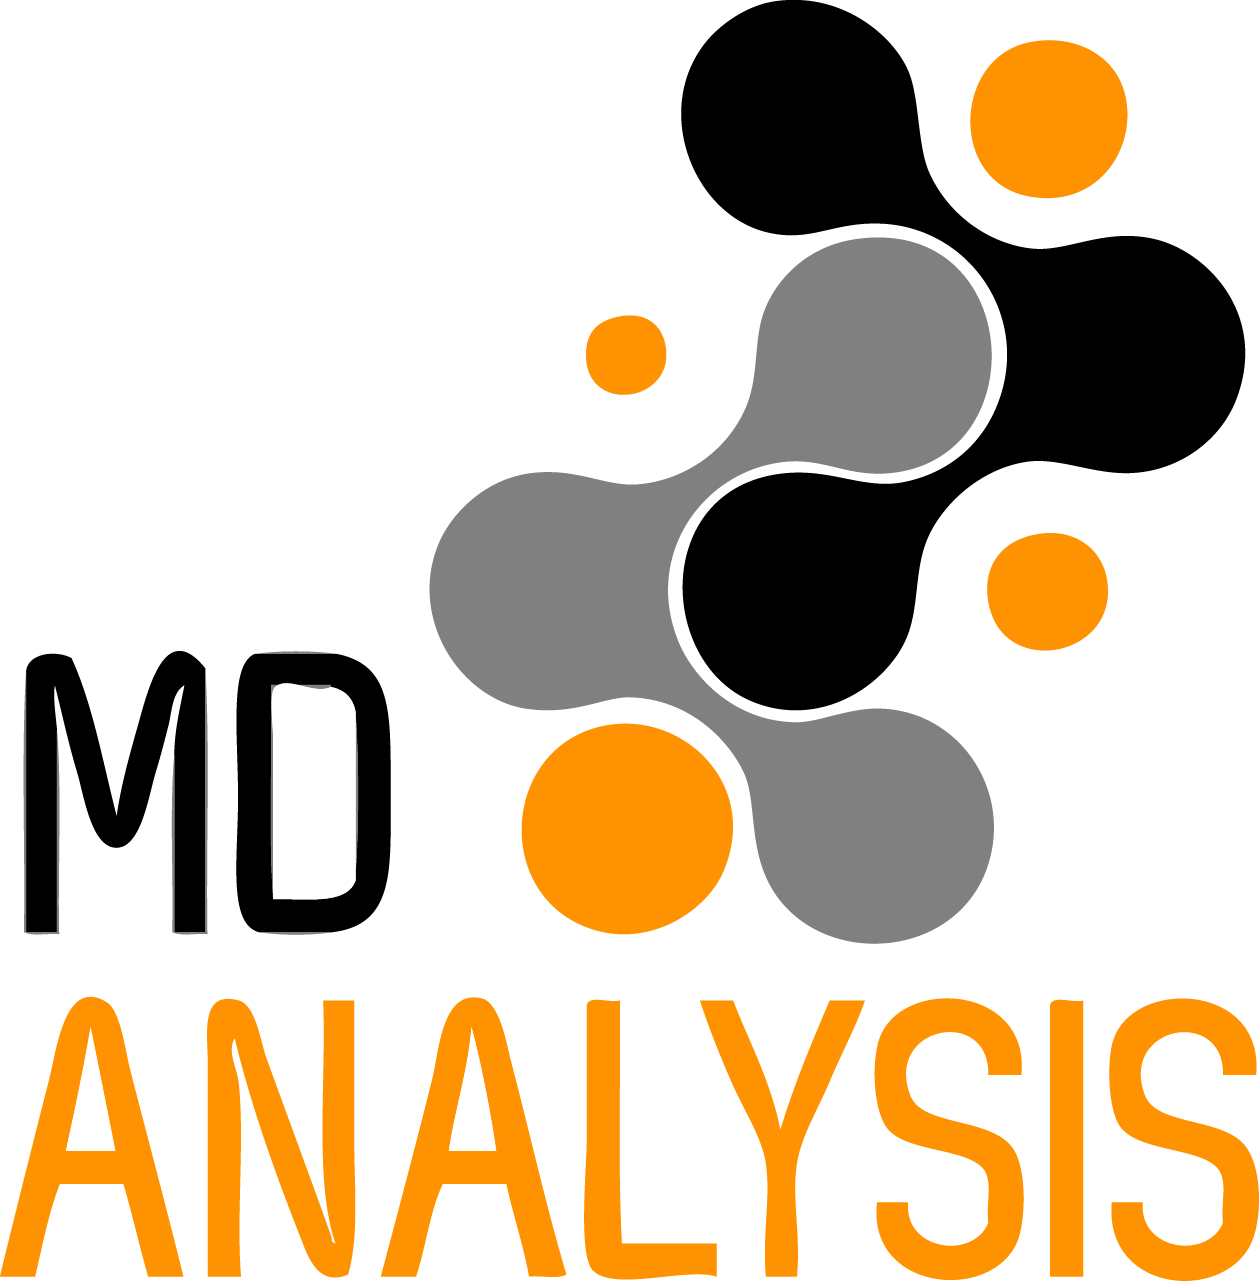 mdanalysis logo